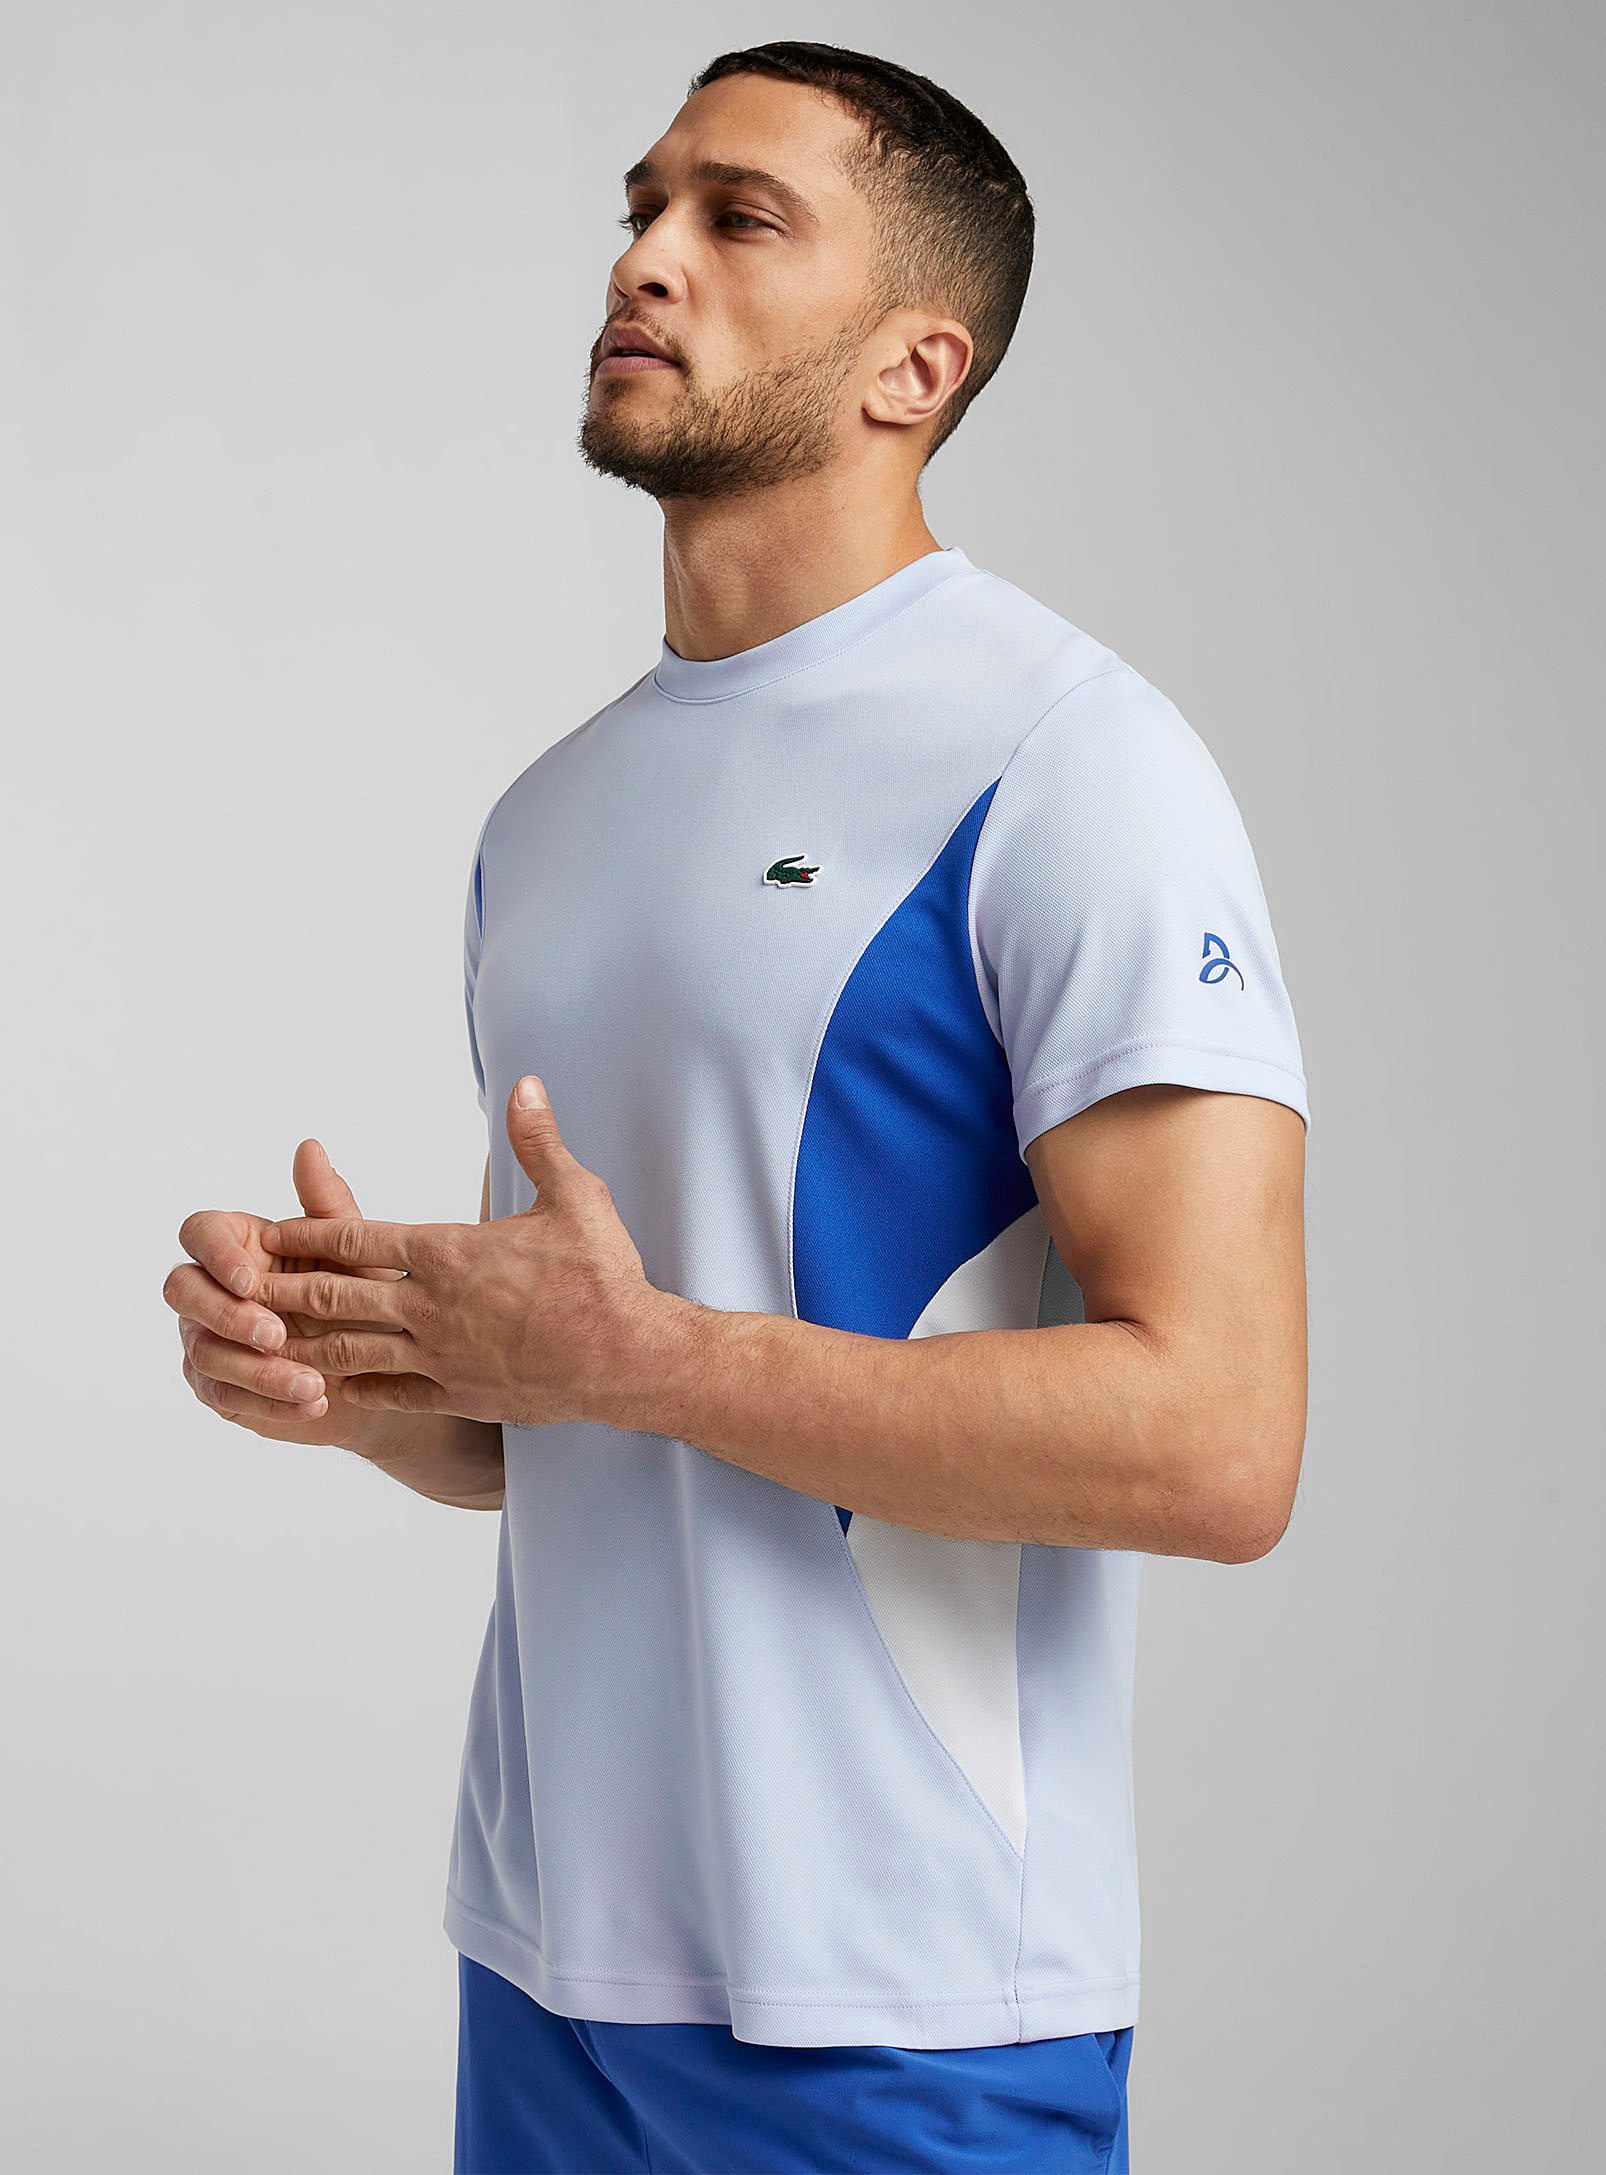 Lacoste - Le t-shirt jersey piqué Novak Djokovic